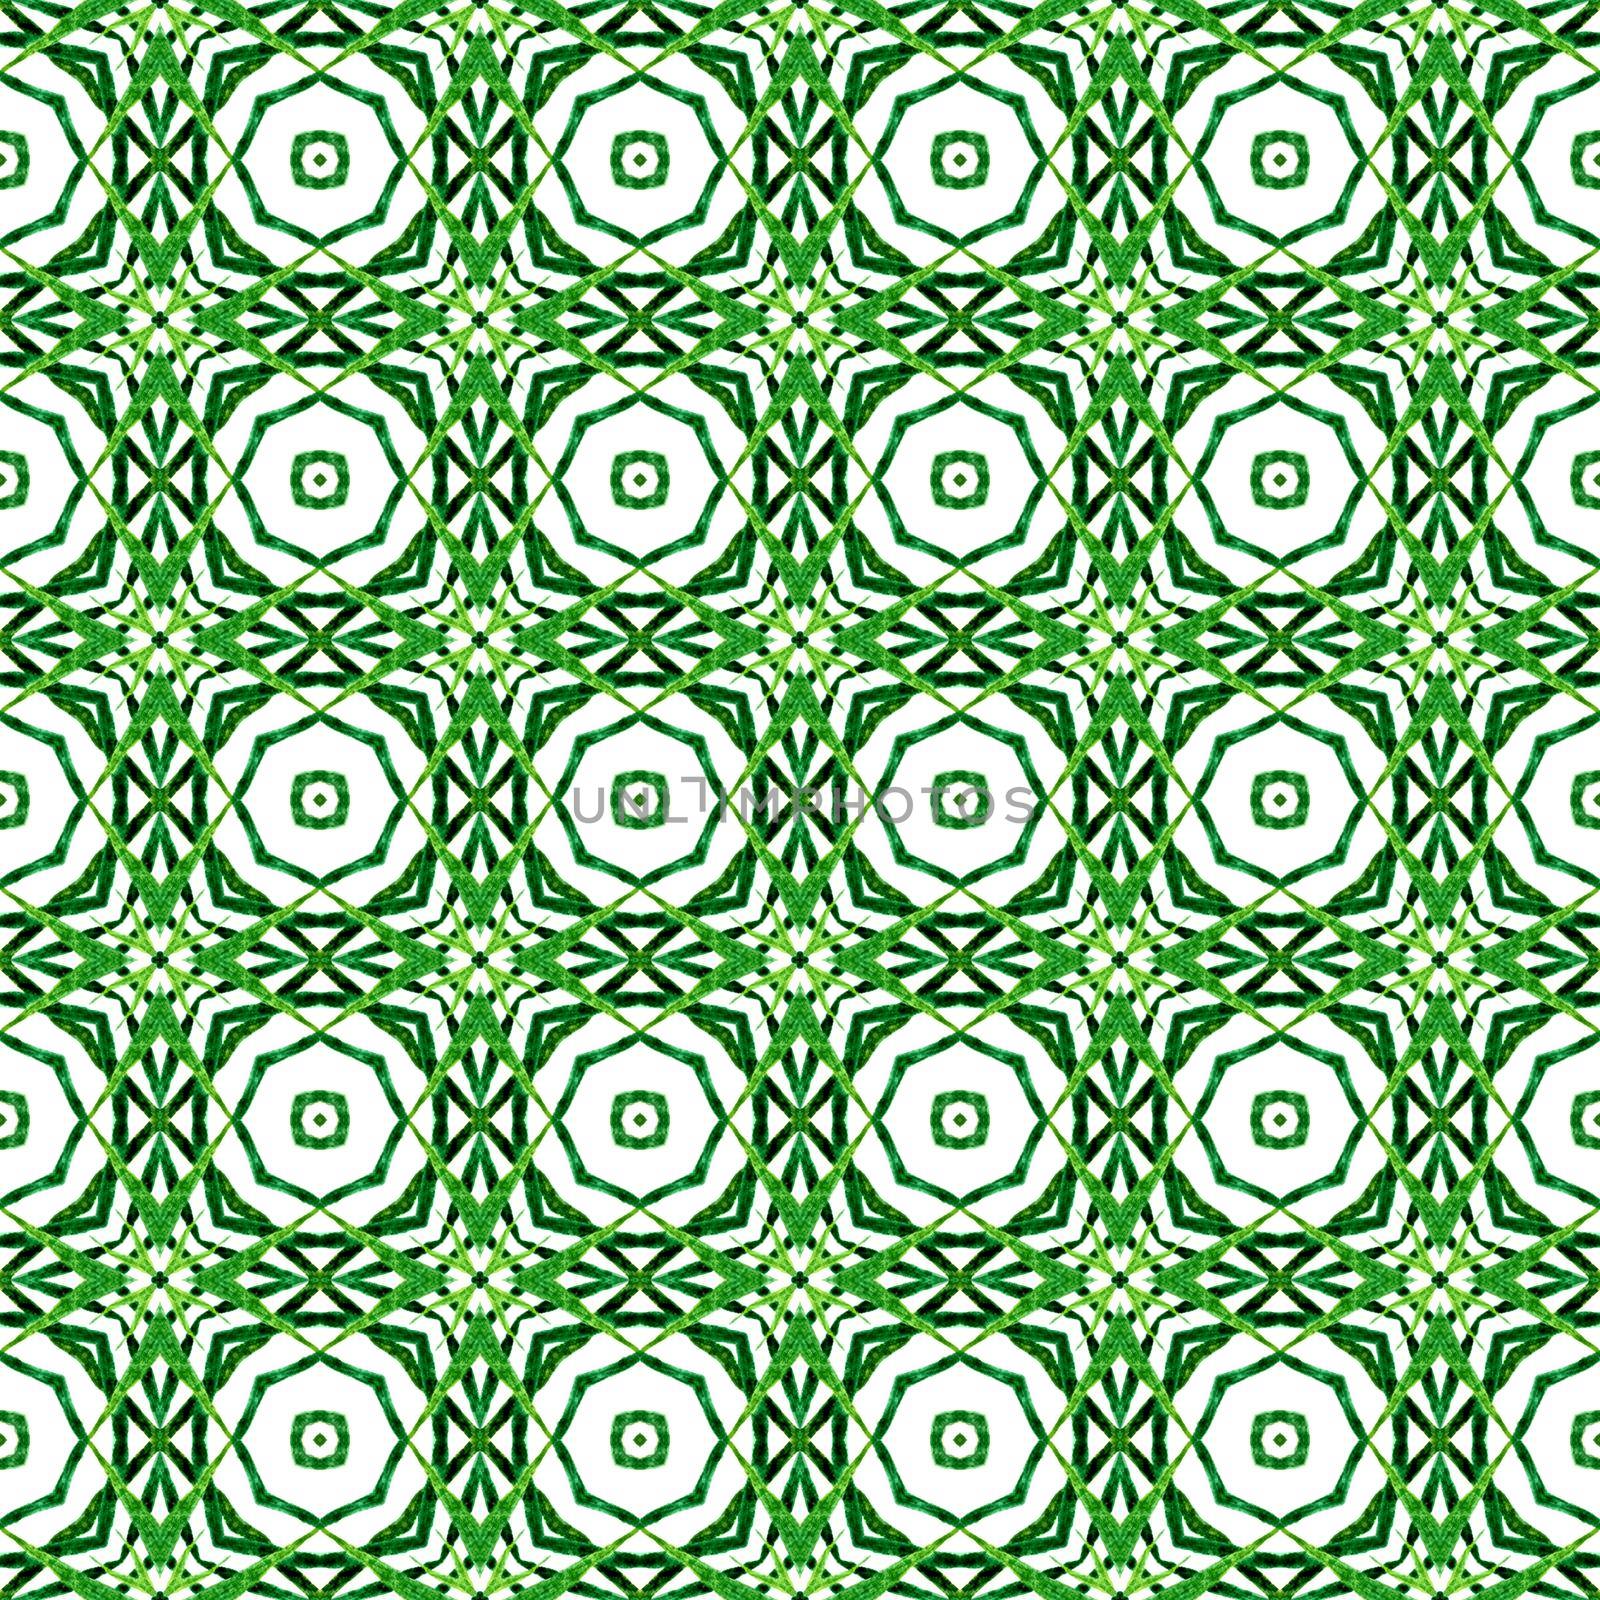 Mosaic seamless pattern. Green wondrous boho chic by beginagain